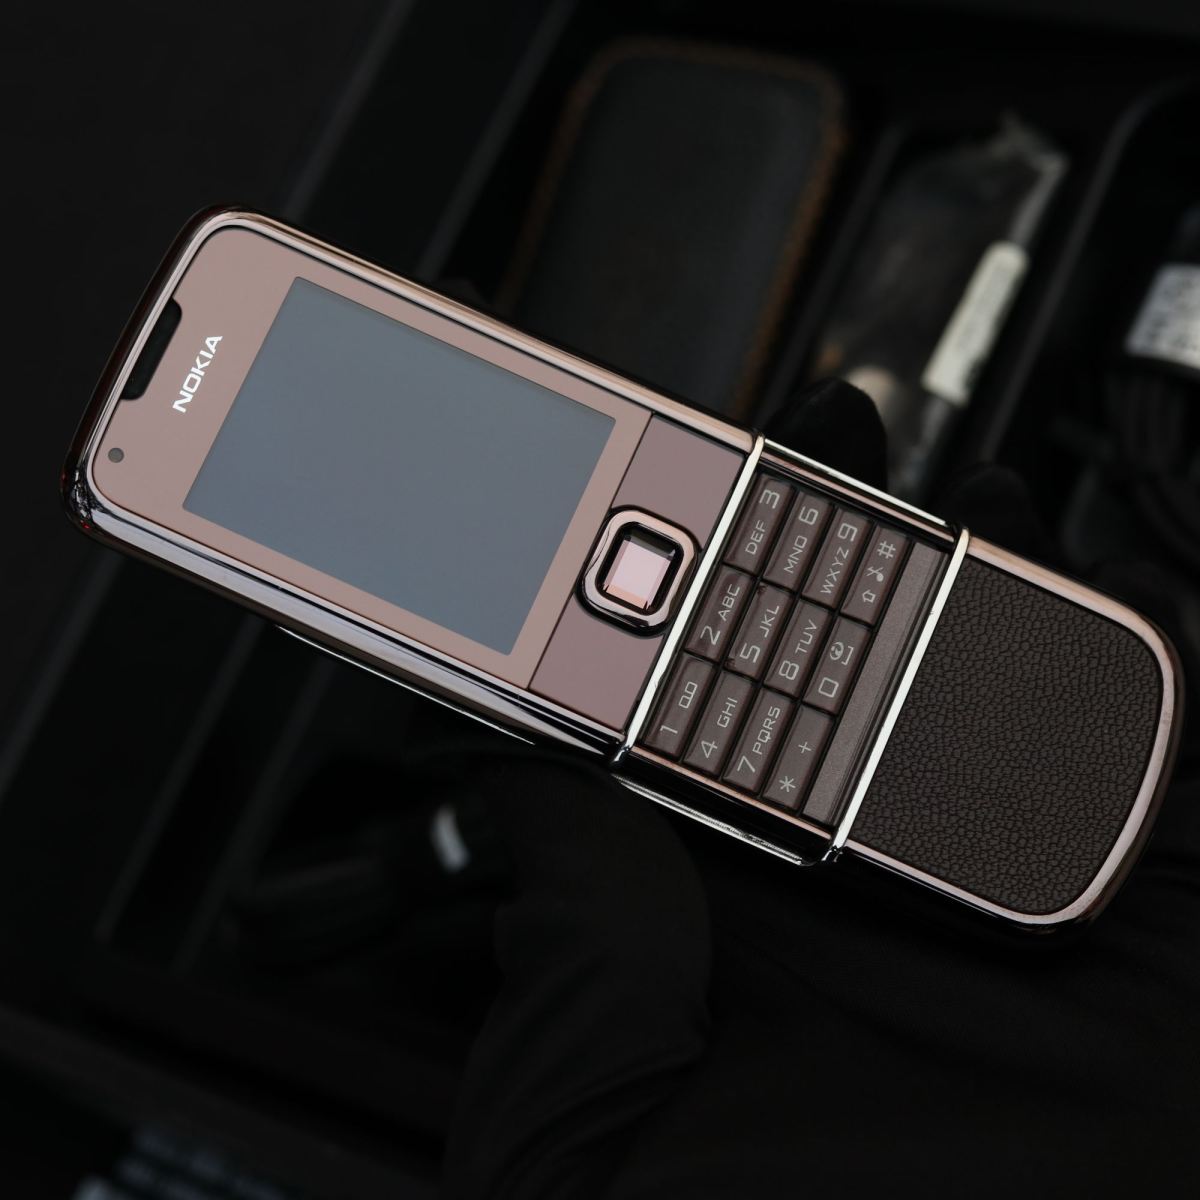 Nokia-8800-Arter-Sapphire-Brown